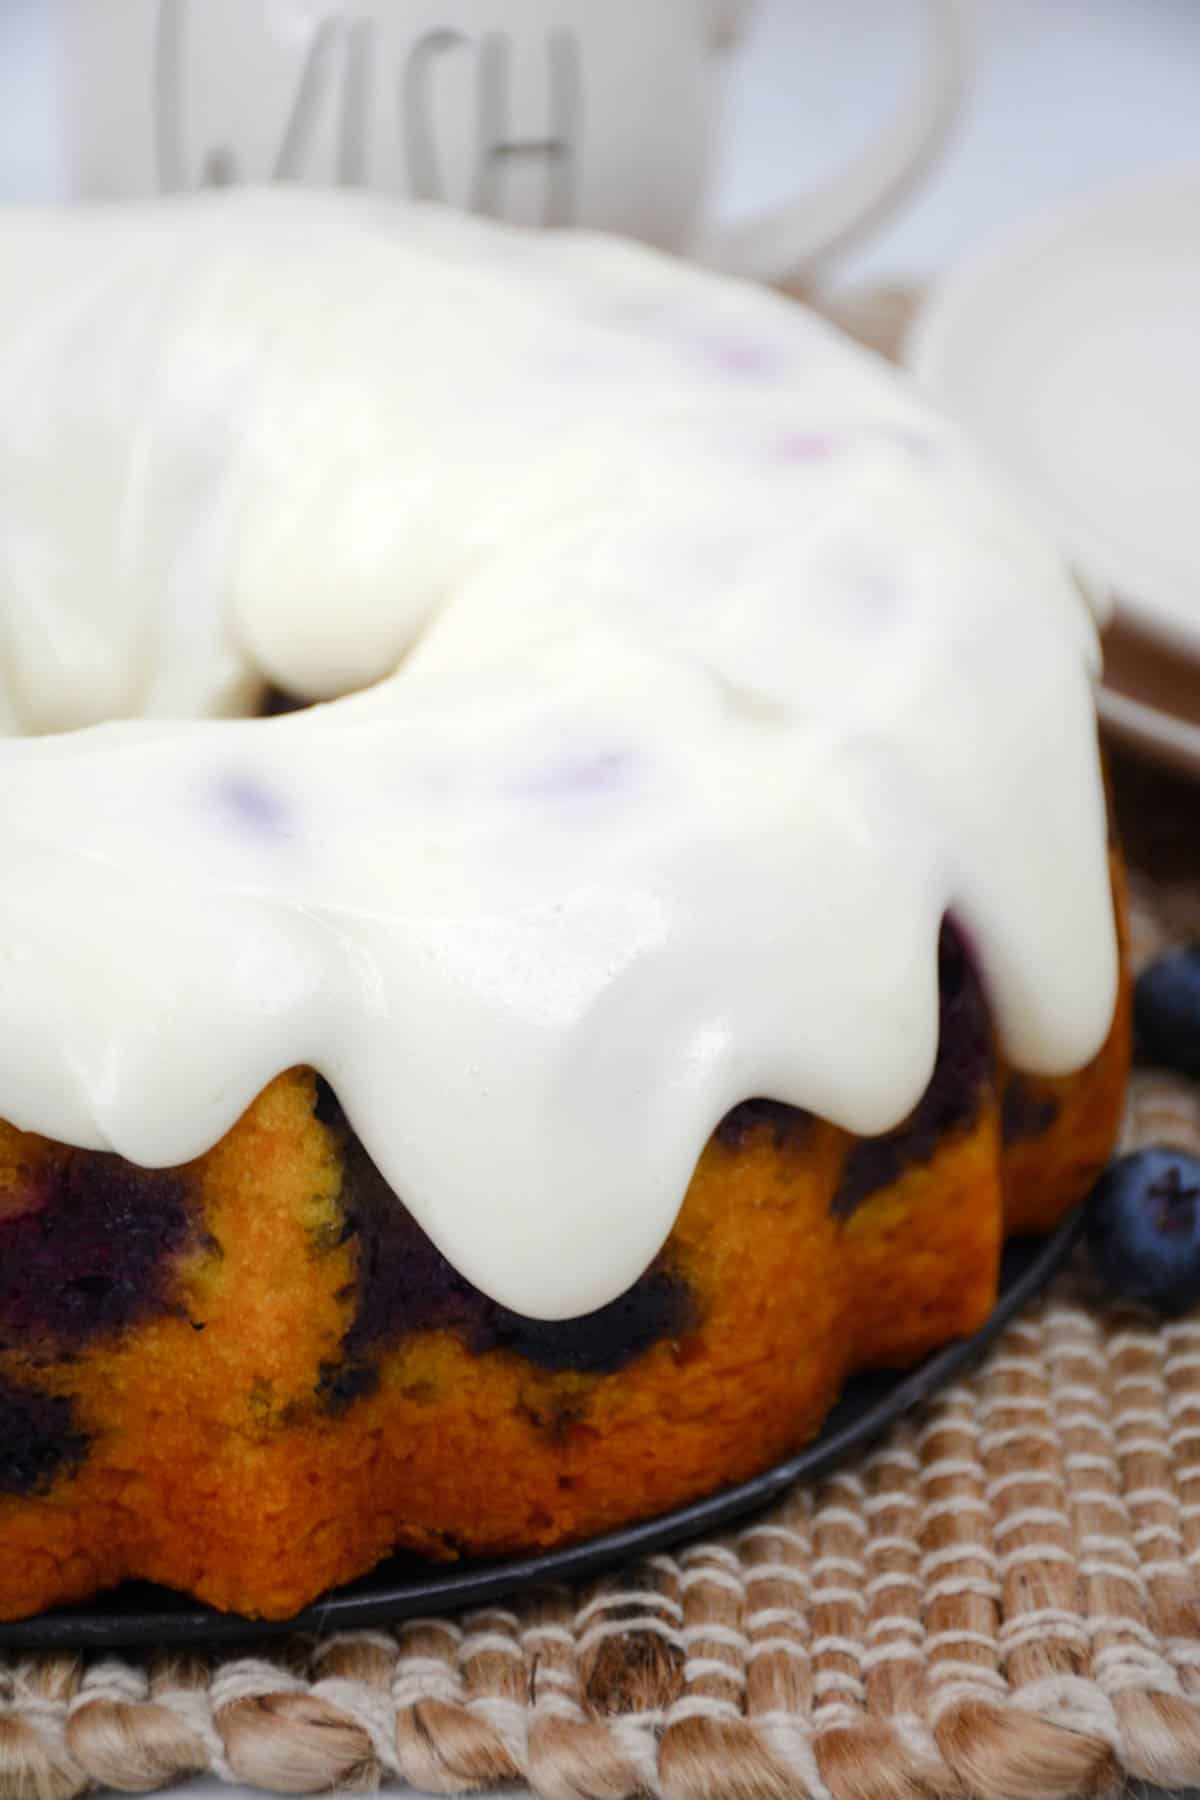 Blueberry Pound Cake with a Cake Mix